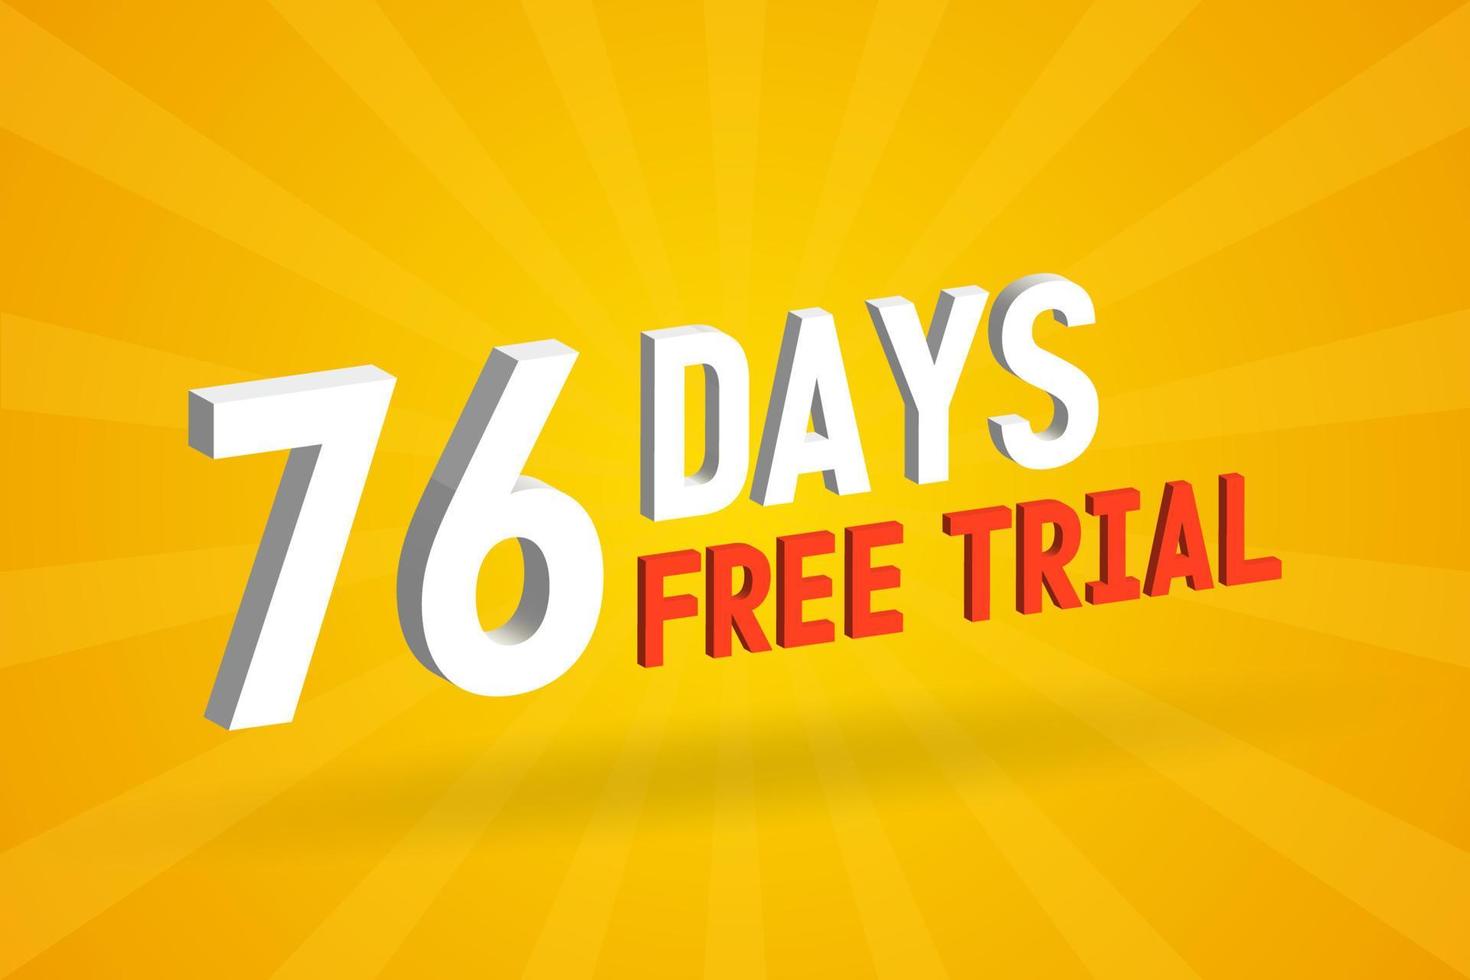 oferta gratuita 76 días de prueba gratuita texto 3d stock vector